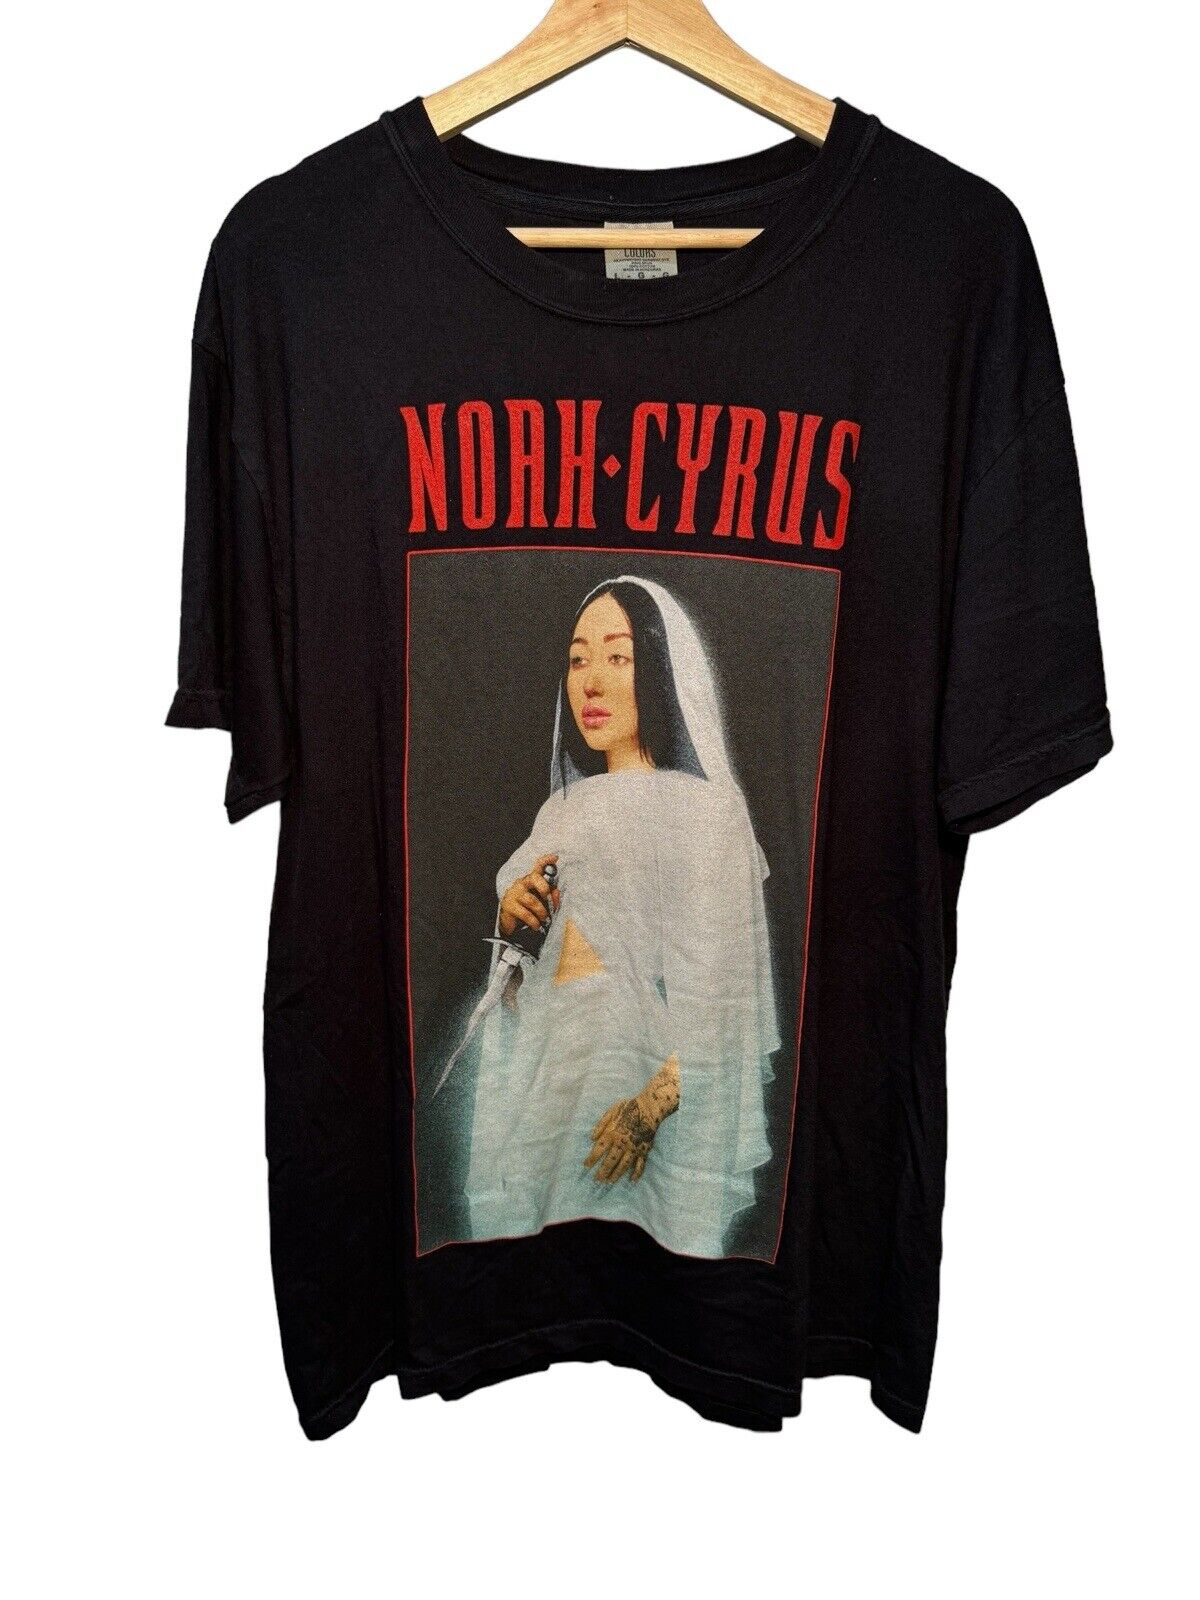 Noah Cyrus Tour T-Shirt Official RARE Large Black Short Sleeve Dbl Sided 